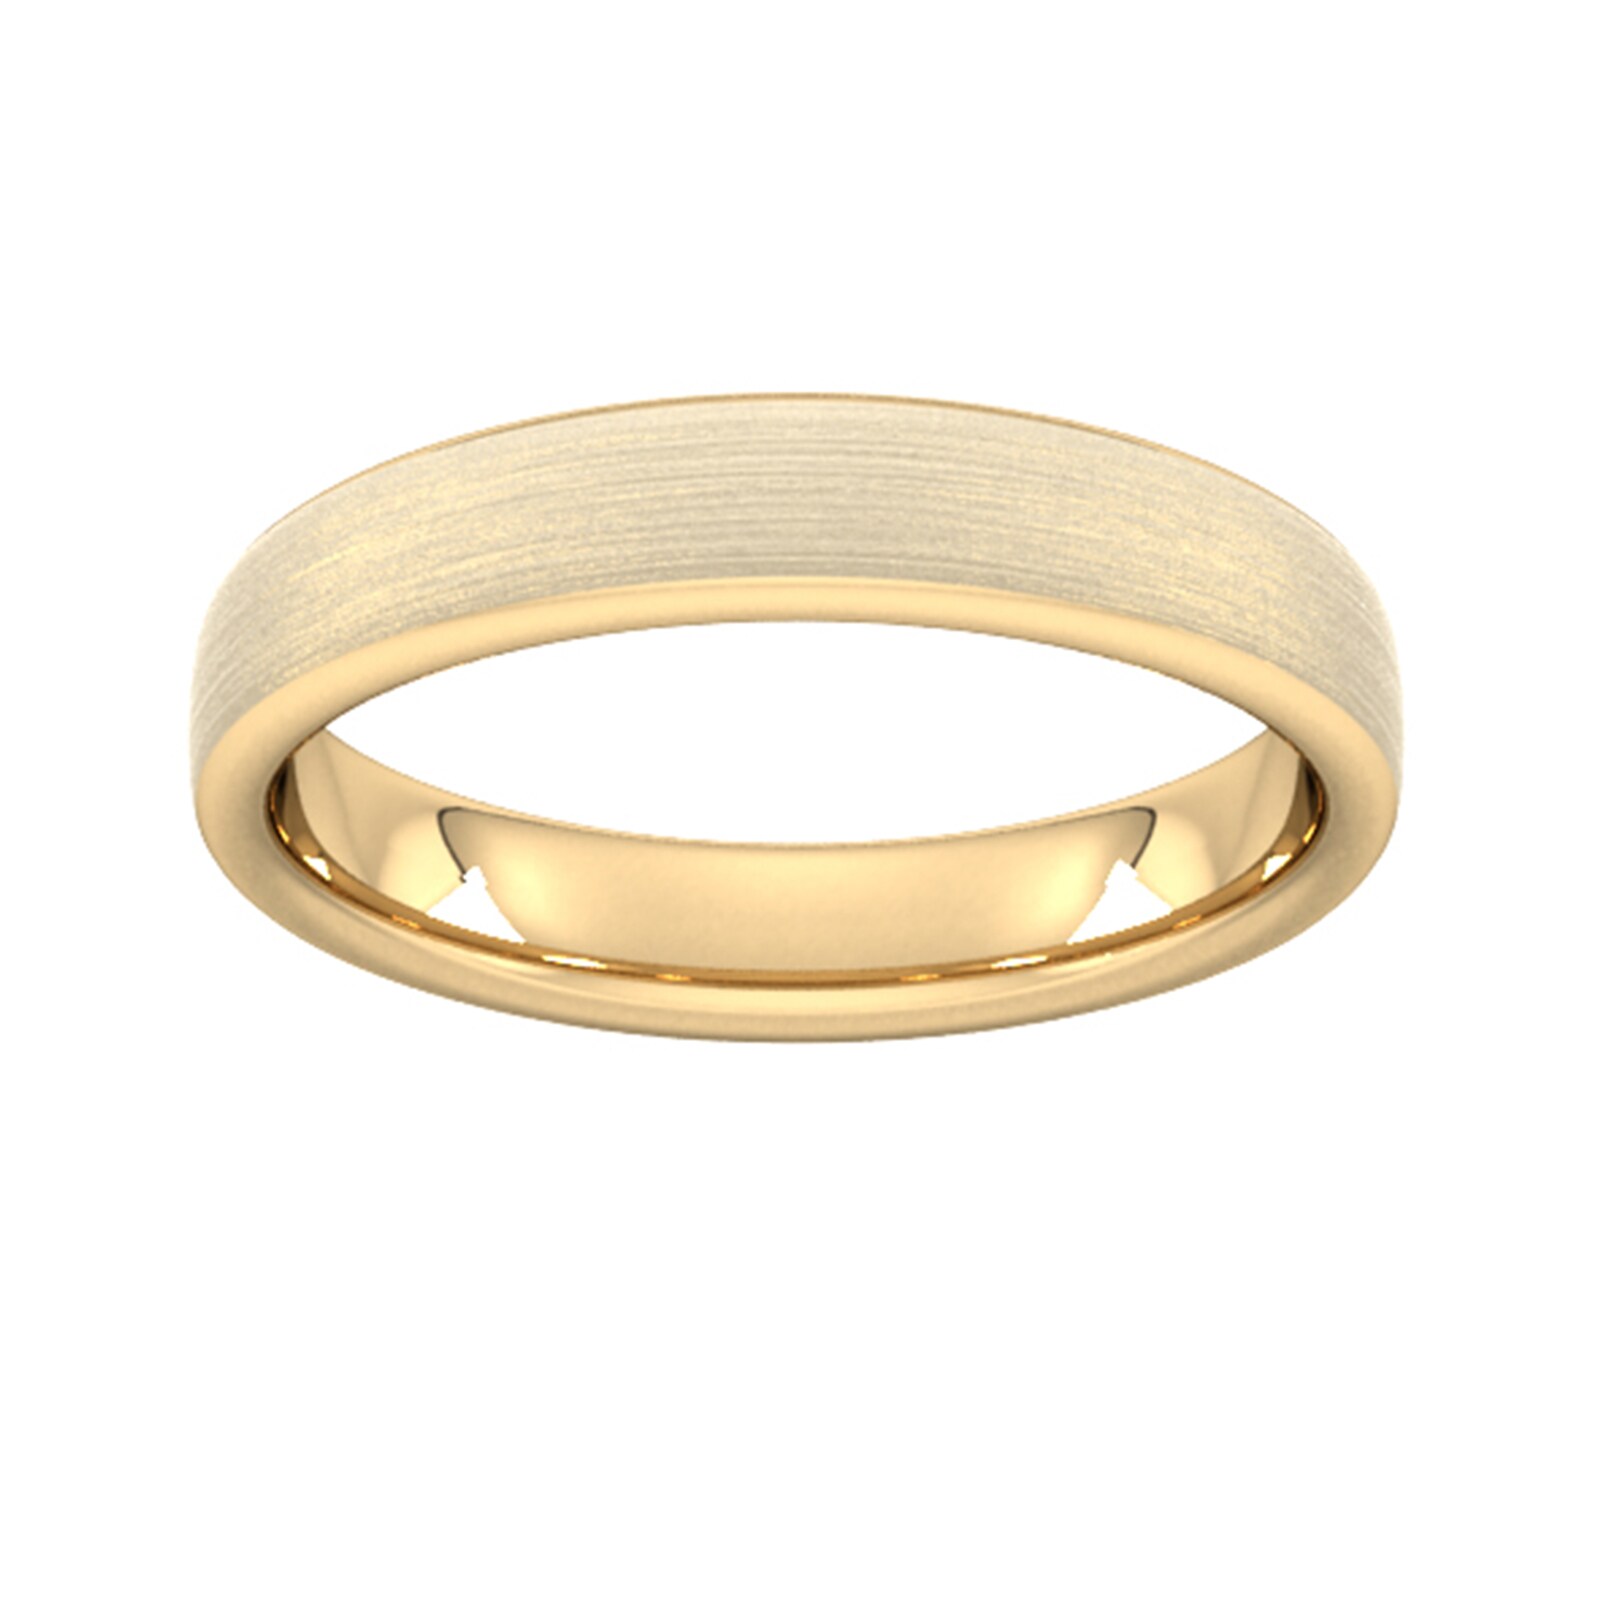 4mm Slight Court Standard Matt Finished Wedding Ring In 9 Carat Yellow Gold - Ring Size O